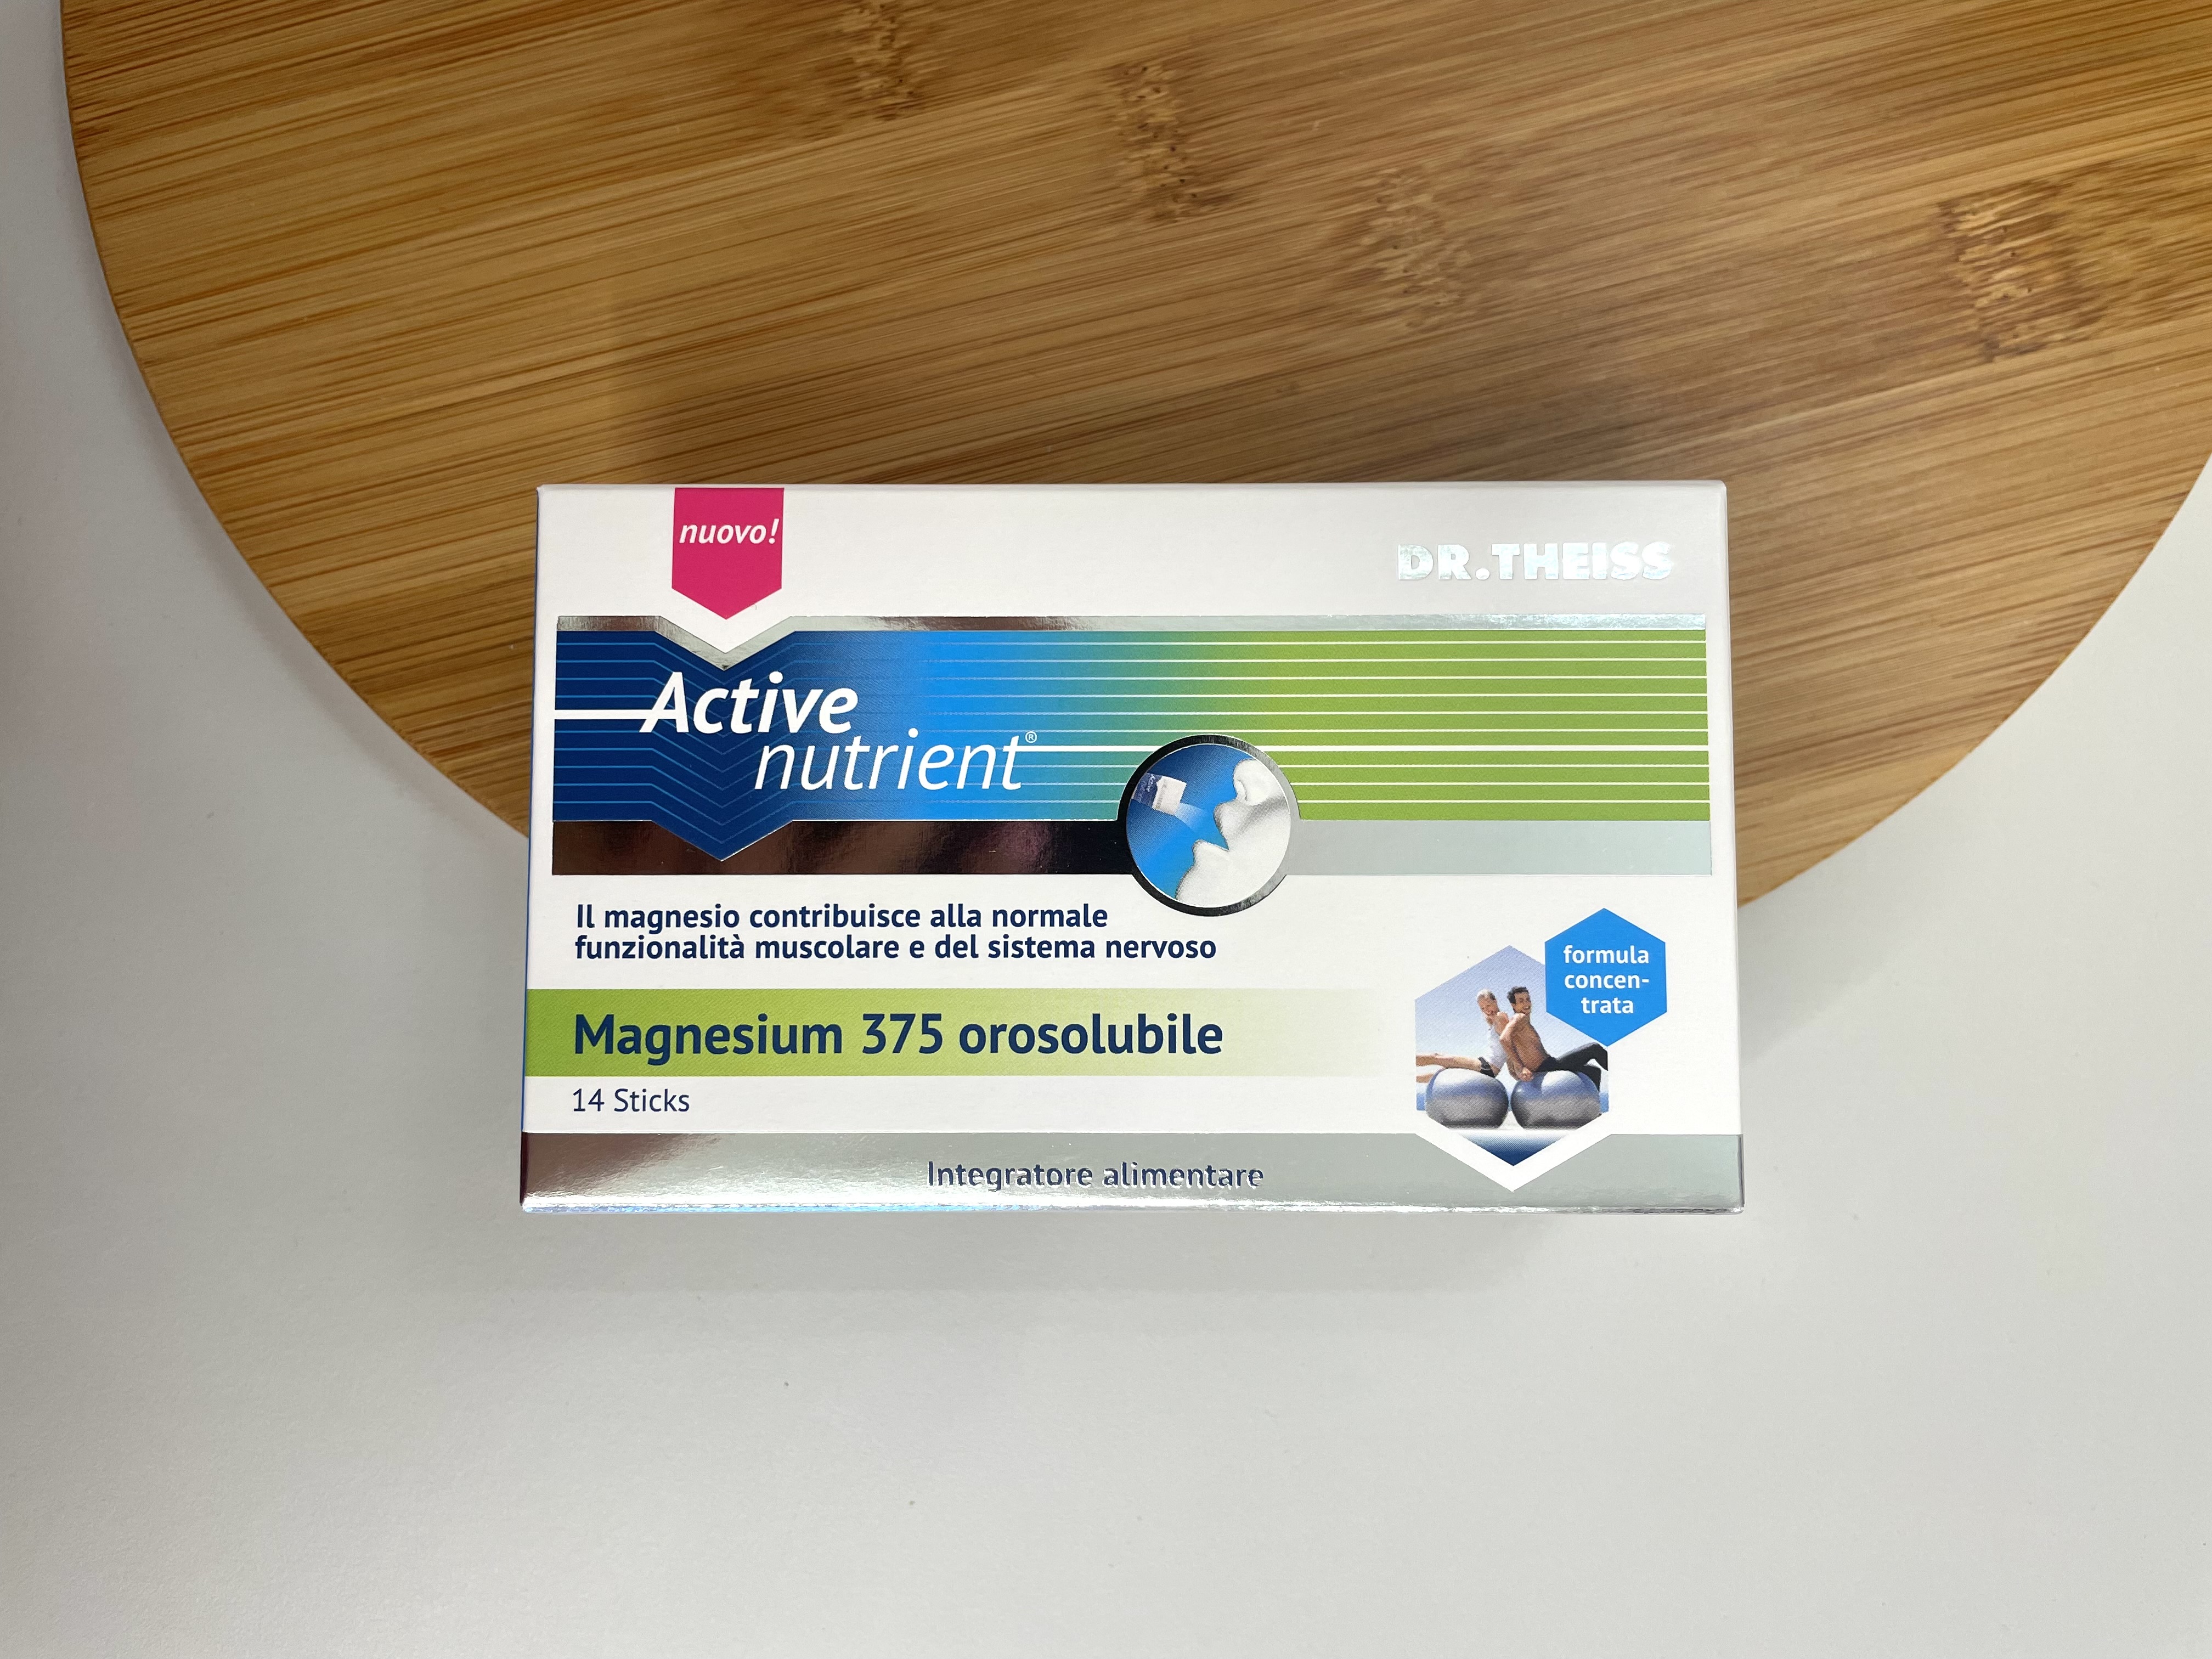 Dr. Theiss: Active Nutrient Magnesium 375 orosolubile